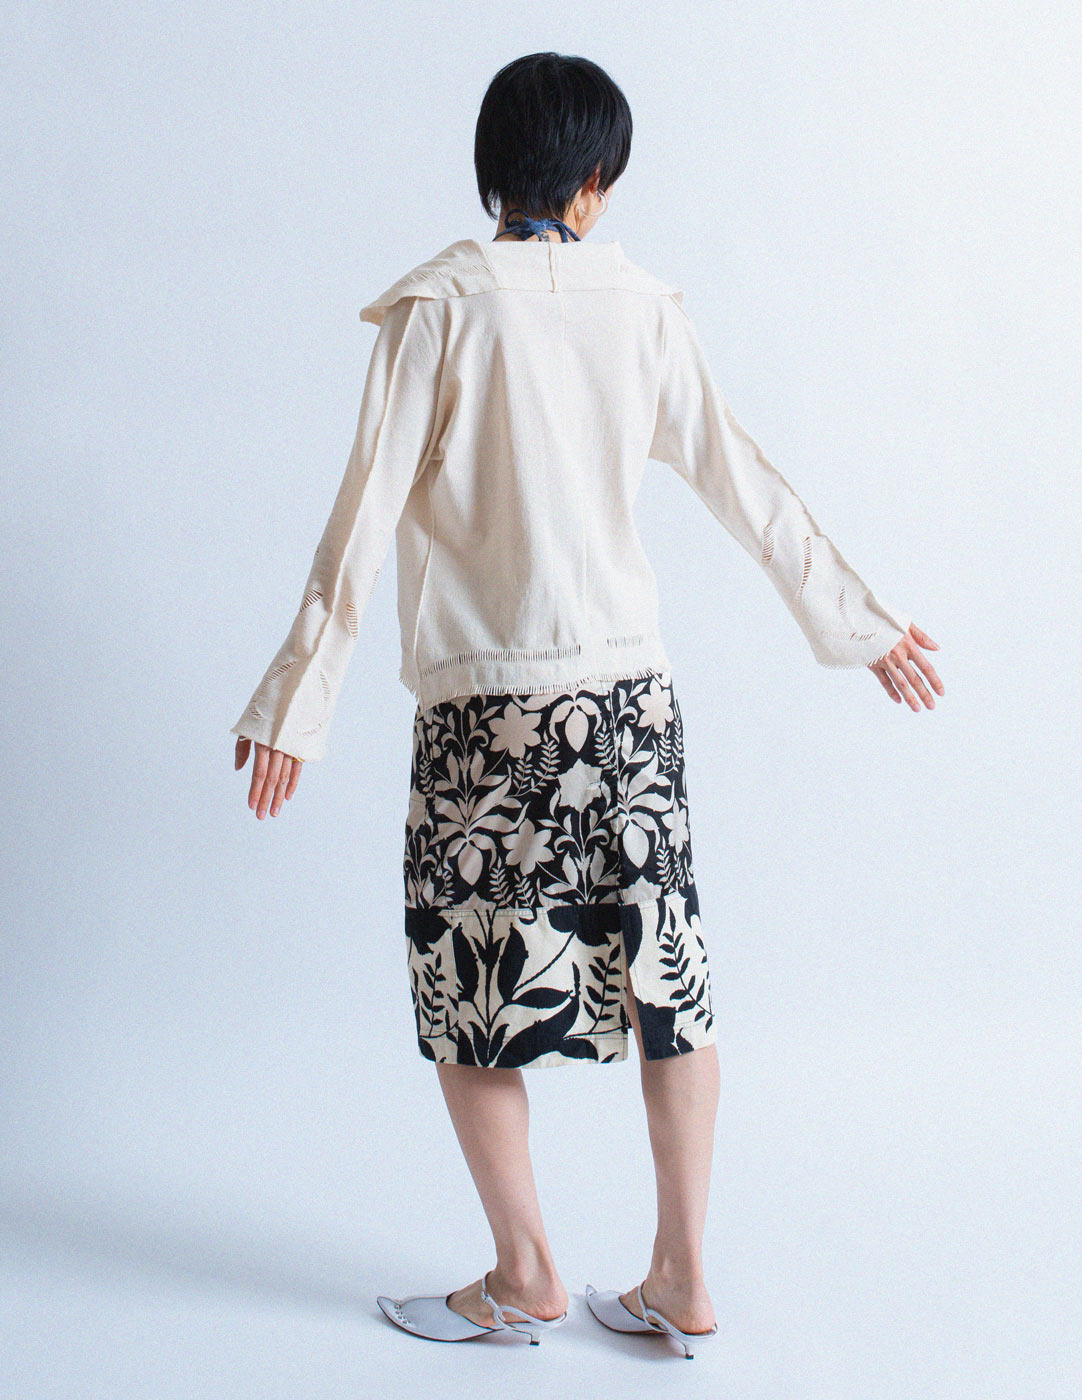 Prada black and white botanical print skirt back view